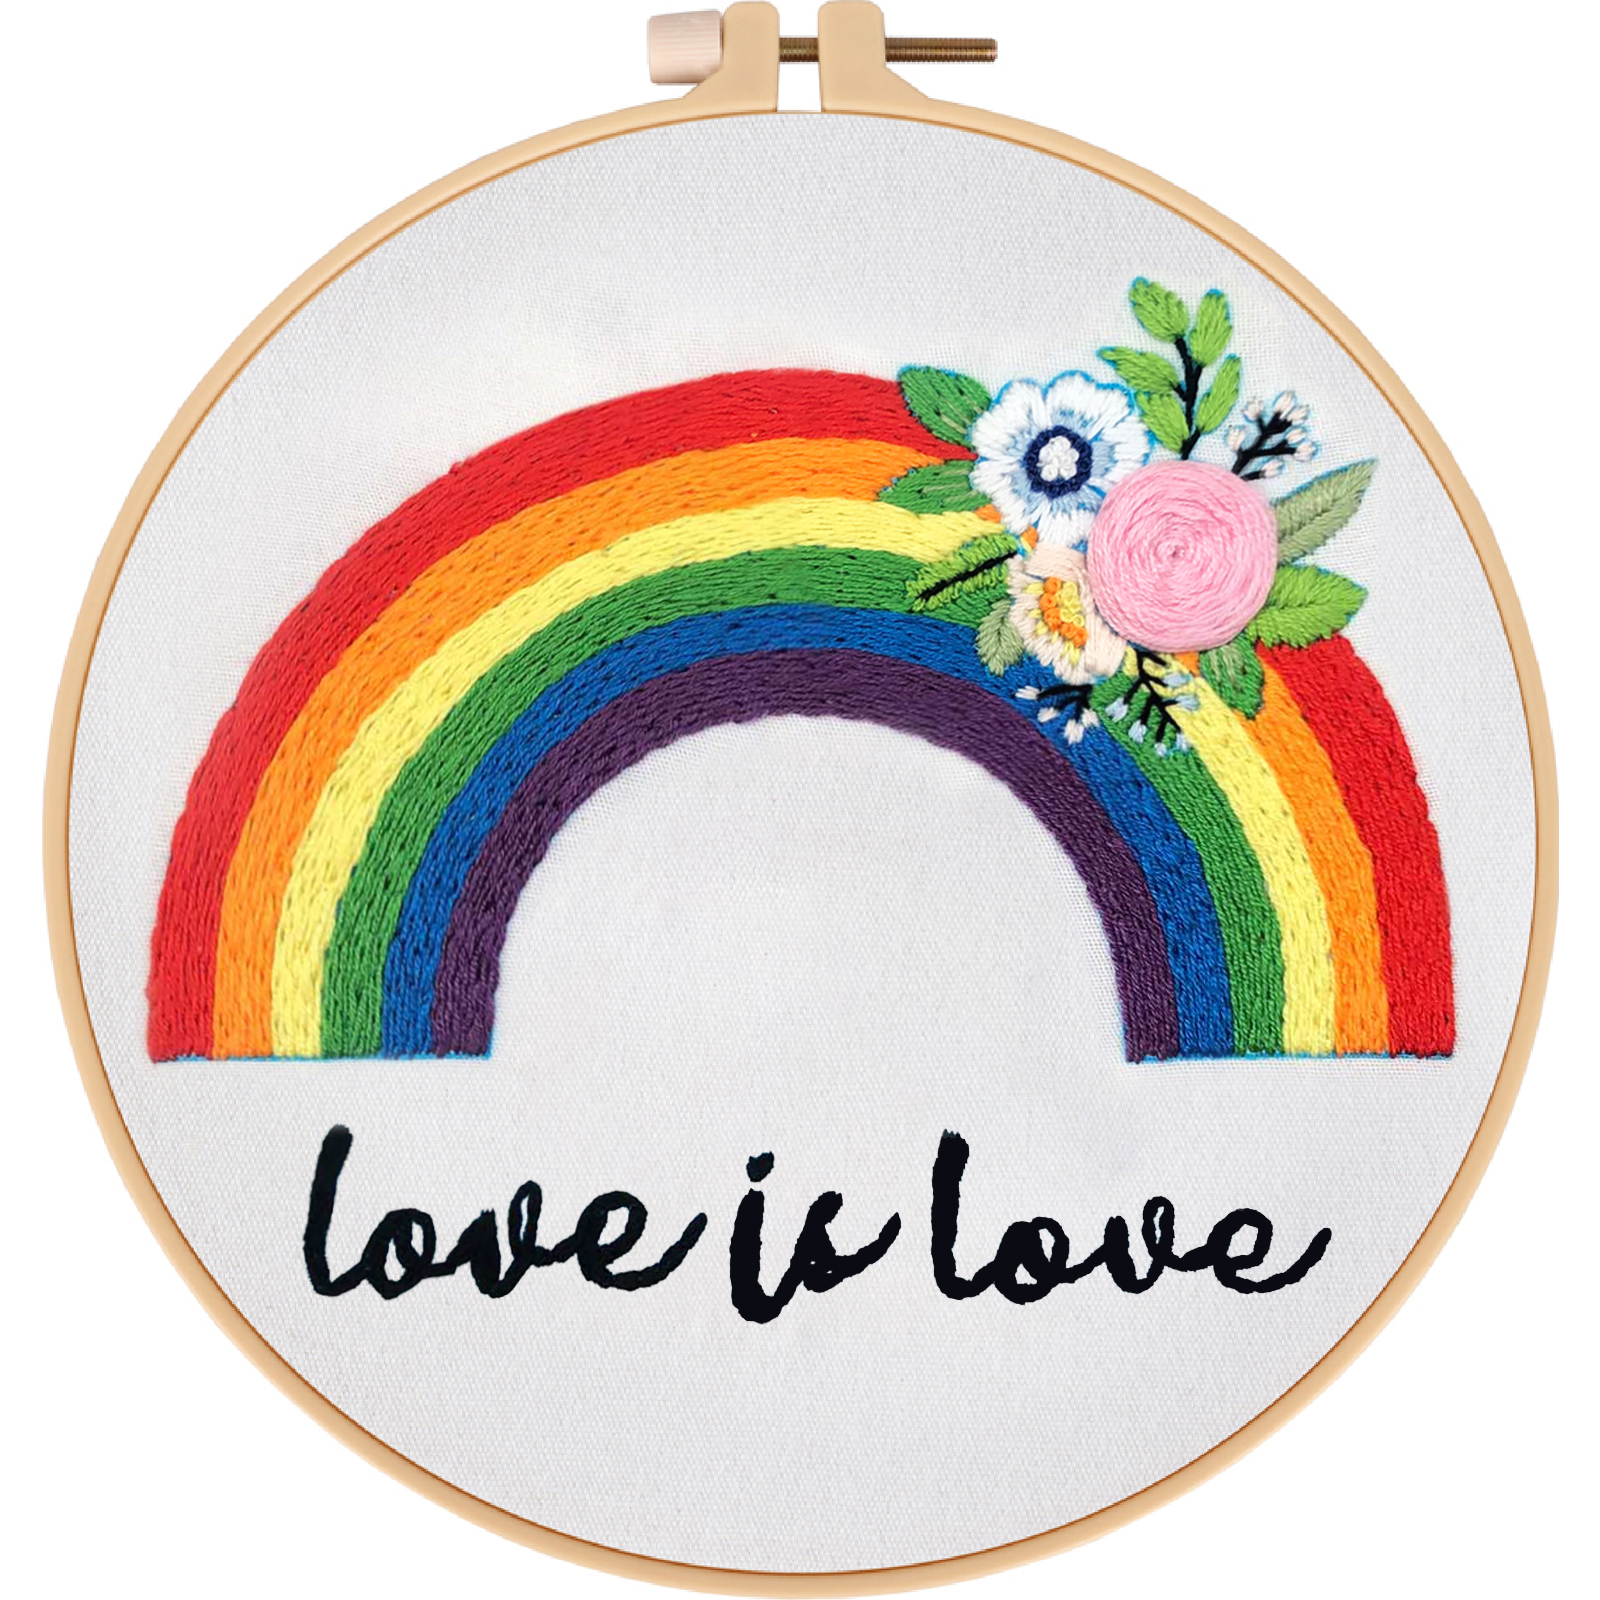 DIY Handmade Embroidery Craft Cross stitch kits beginner  - Rainbow Flower Text Embroidery Pattern